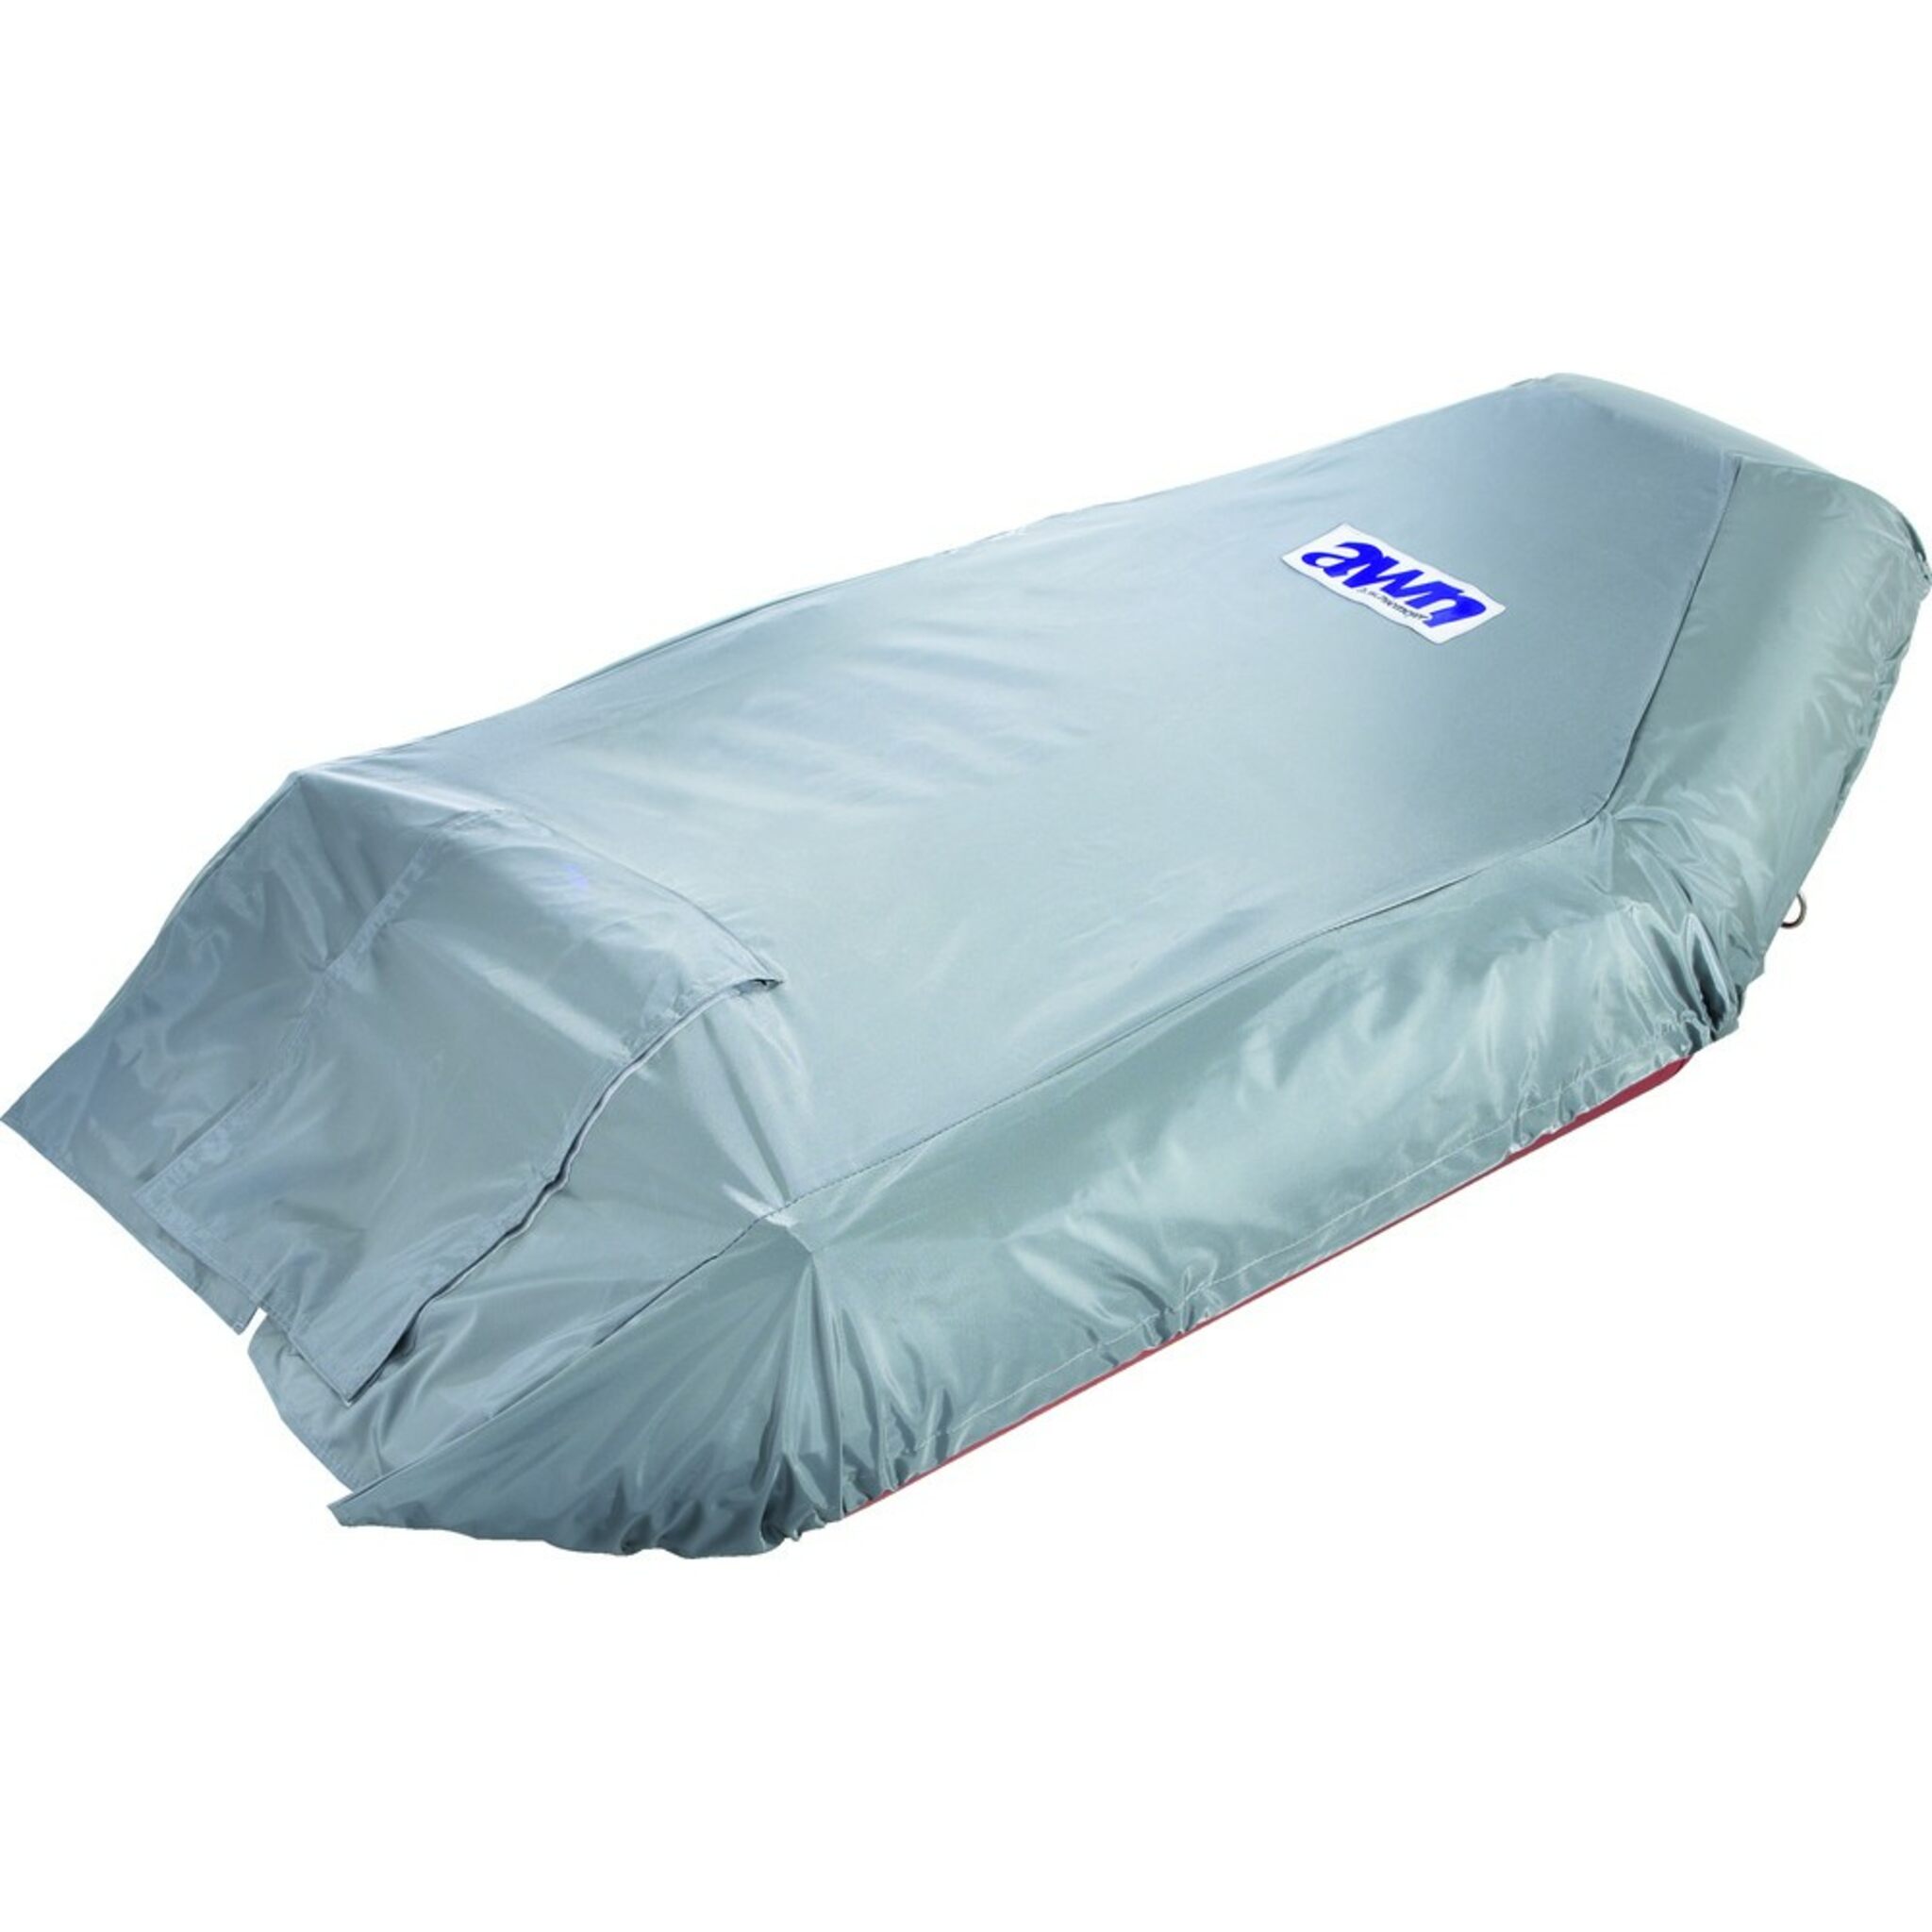 awn inflatable boat tarpaulin